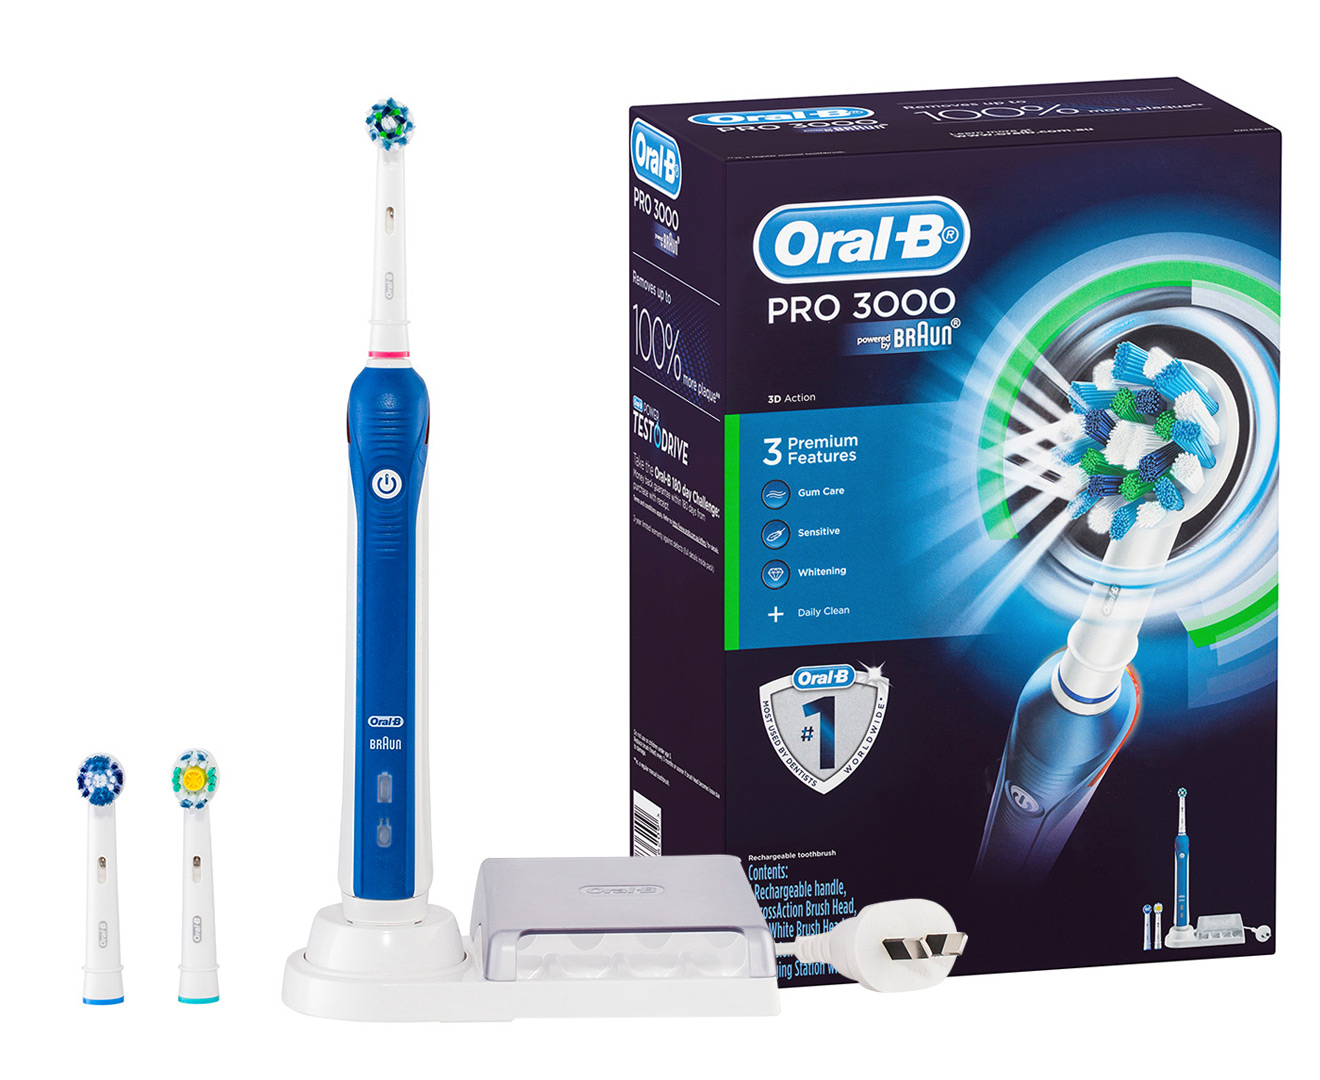 Oral-B Pro 3000 电动牙刷套装 – 低至45折优惠！